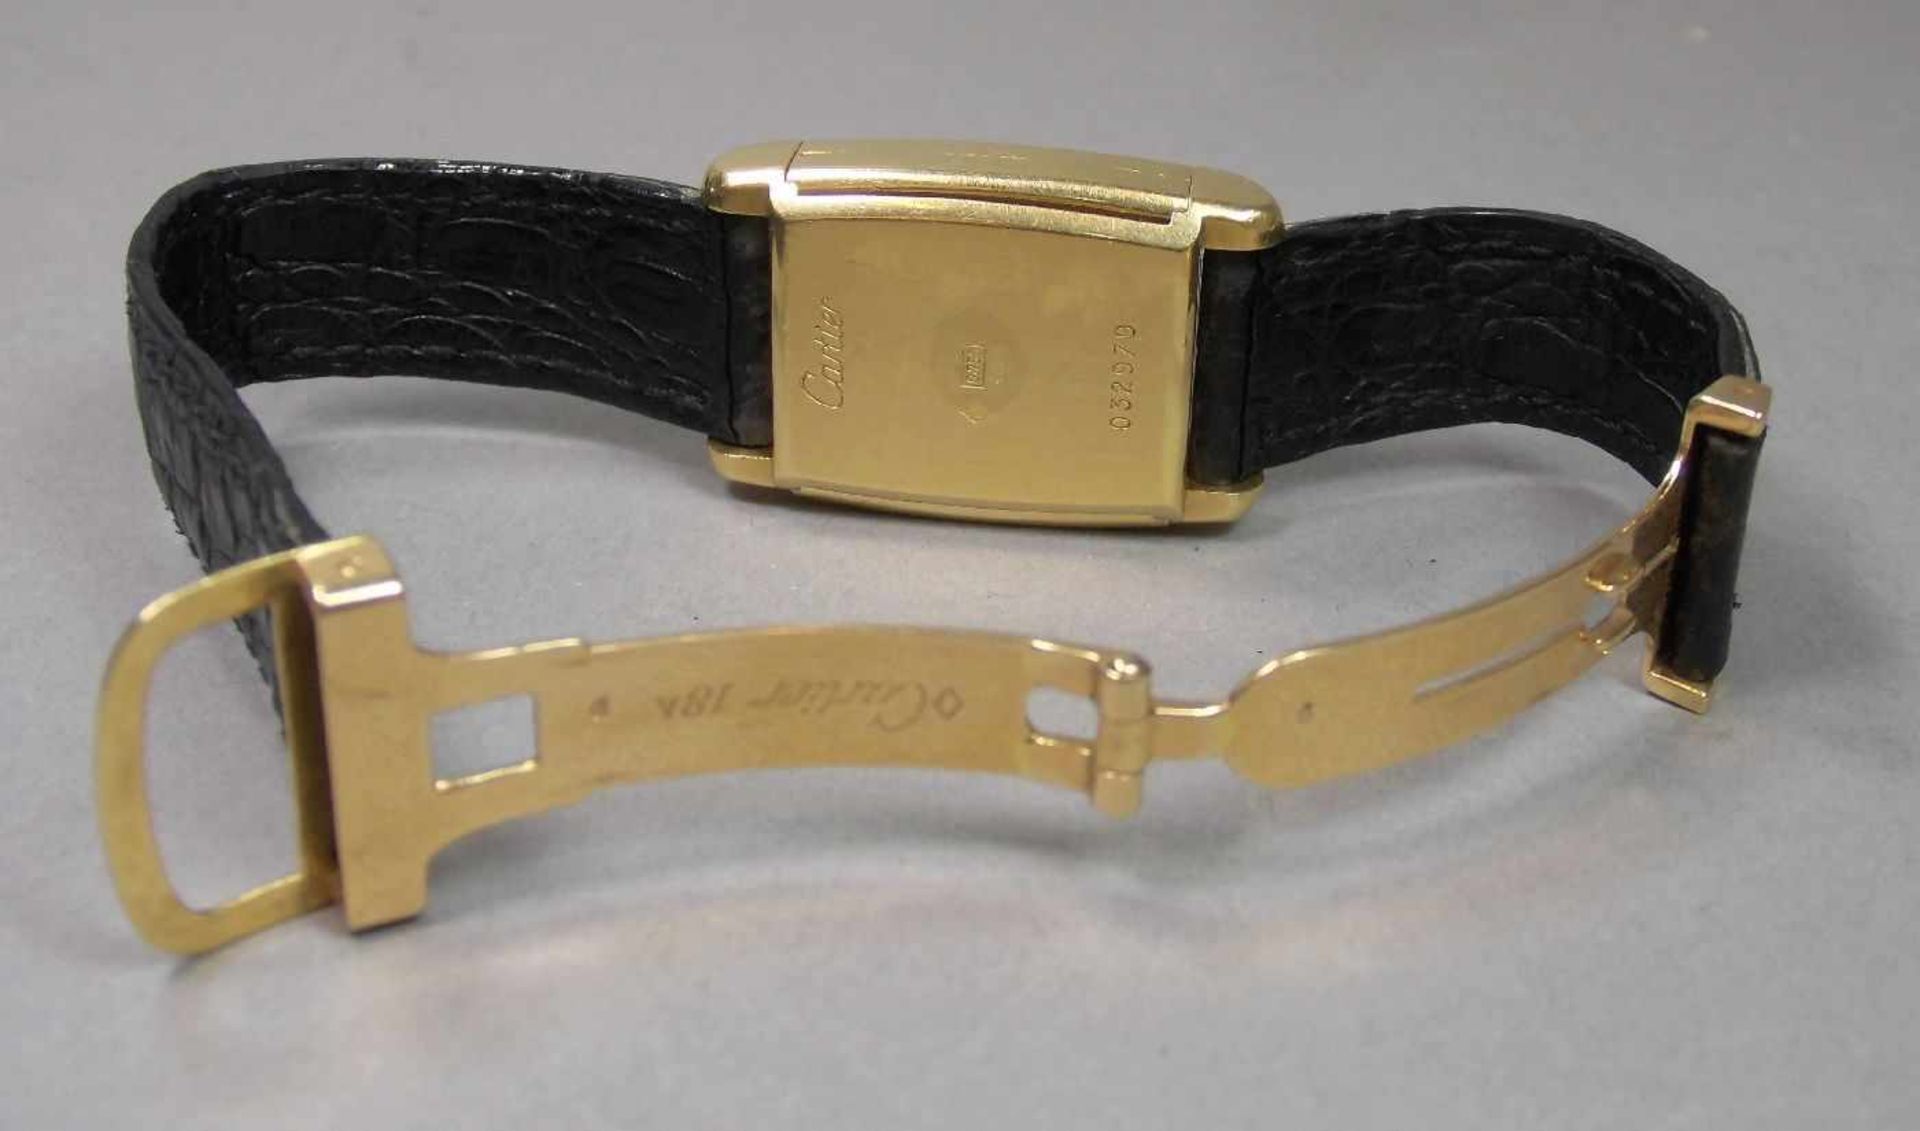 VINTAGE ARMBANDUHR CARTIER REVERSO / wristwatch, Handaufzug, wohl 1970er Jahre, Manufaktur Cartier / - Image 3 of 9